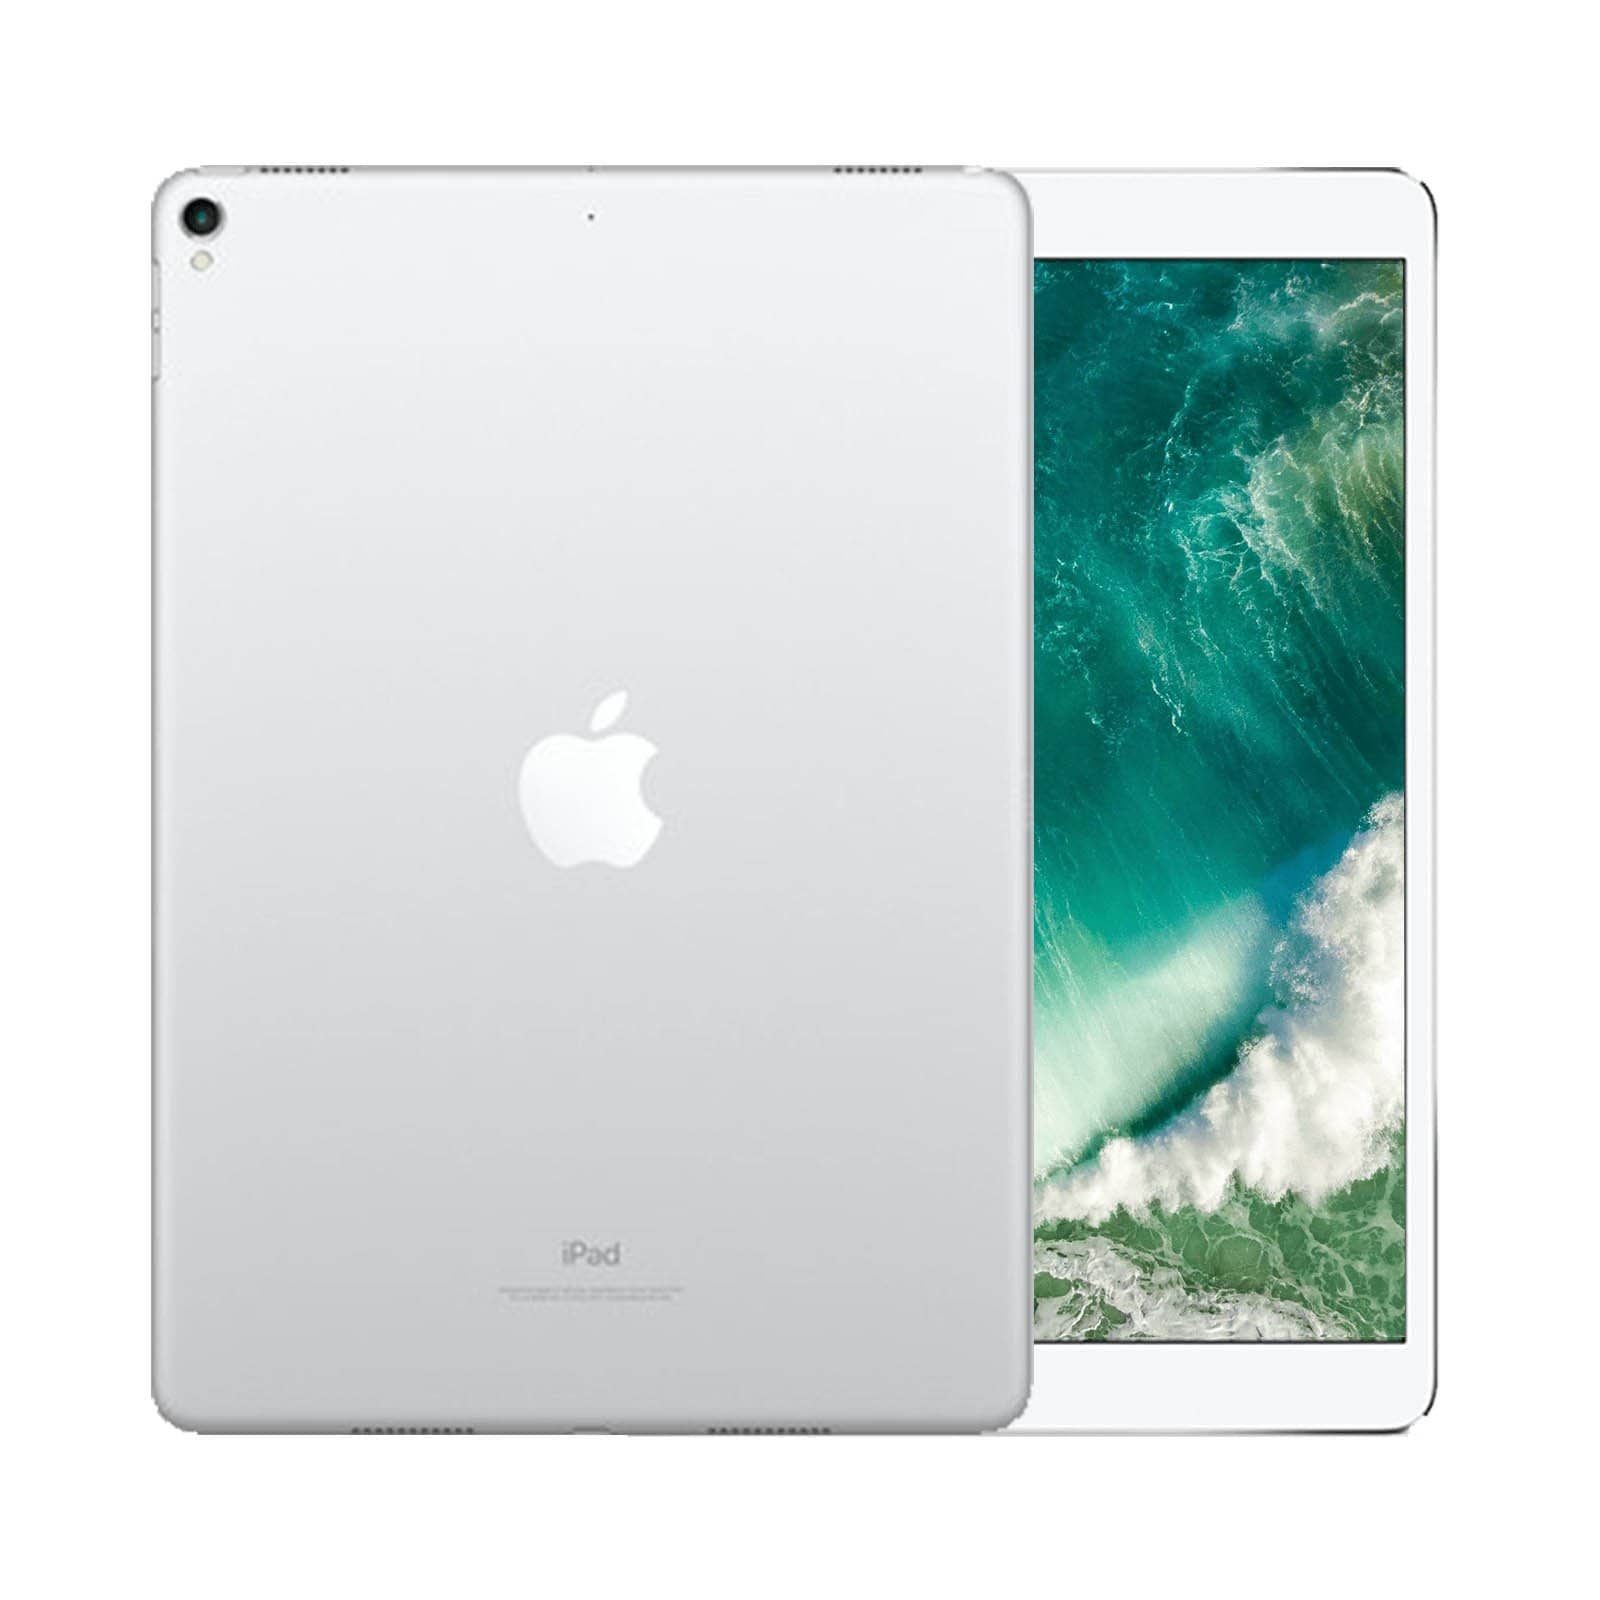 iPad Pro 10.5 Inch 512GB Silver Very Good - WiFi 512GB Silver Very Good